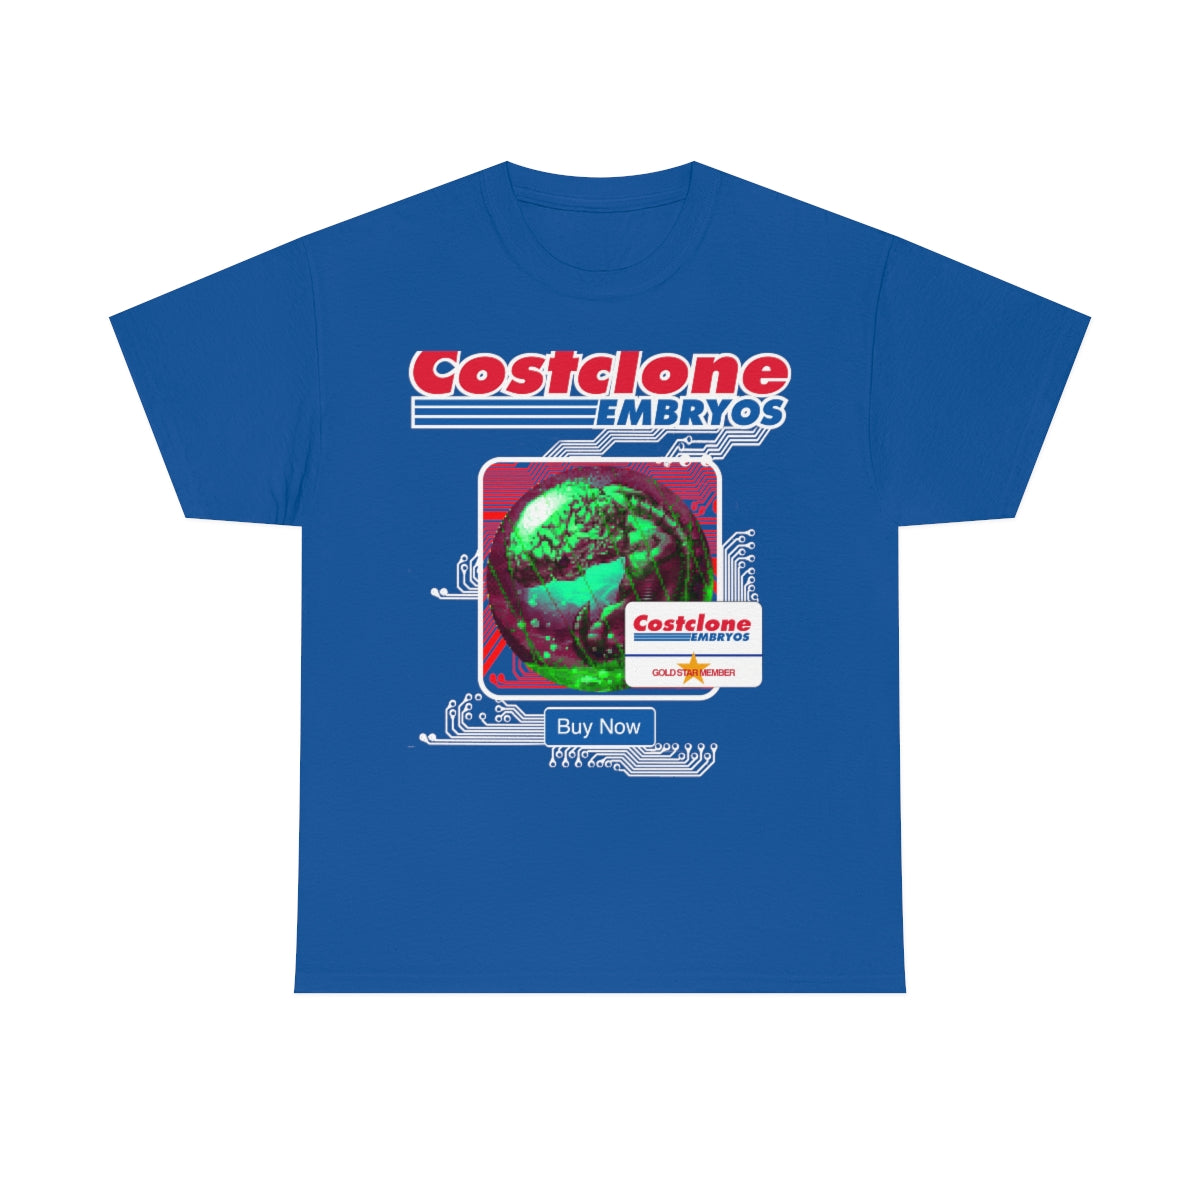 COSTCLONE EMBRYOS T-Shirt